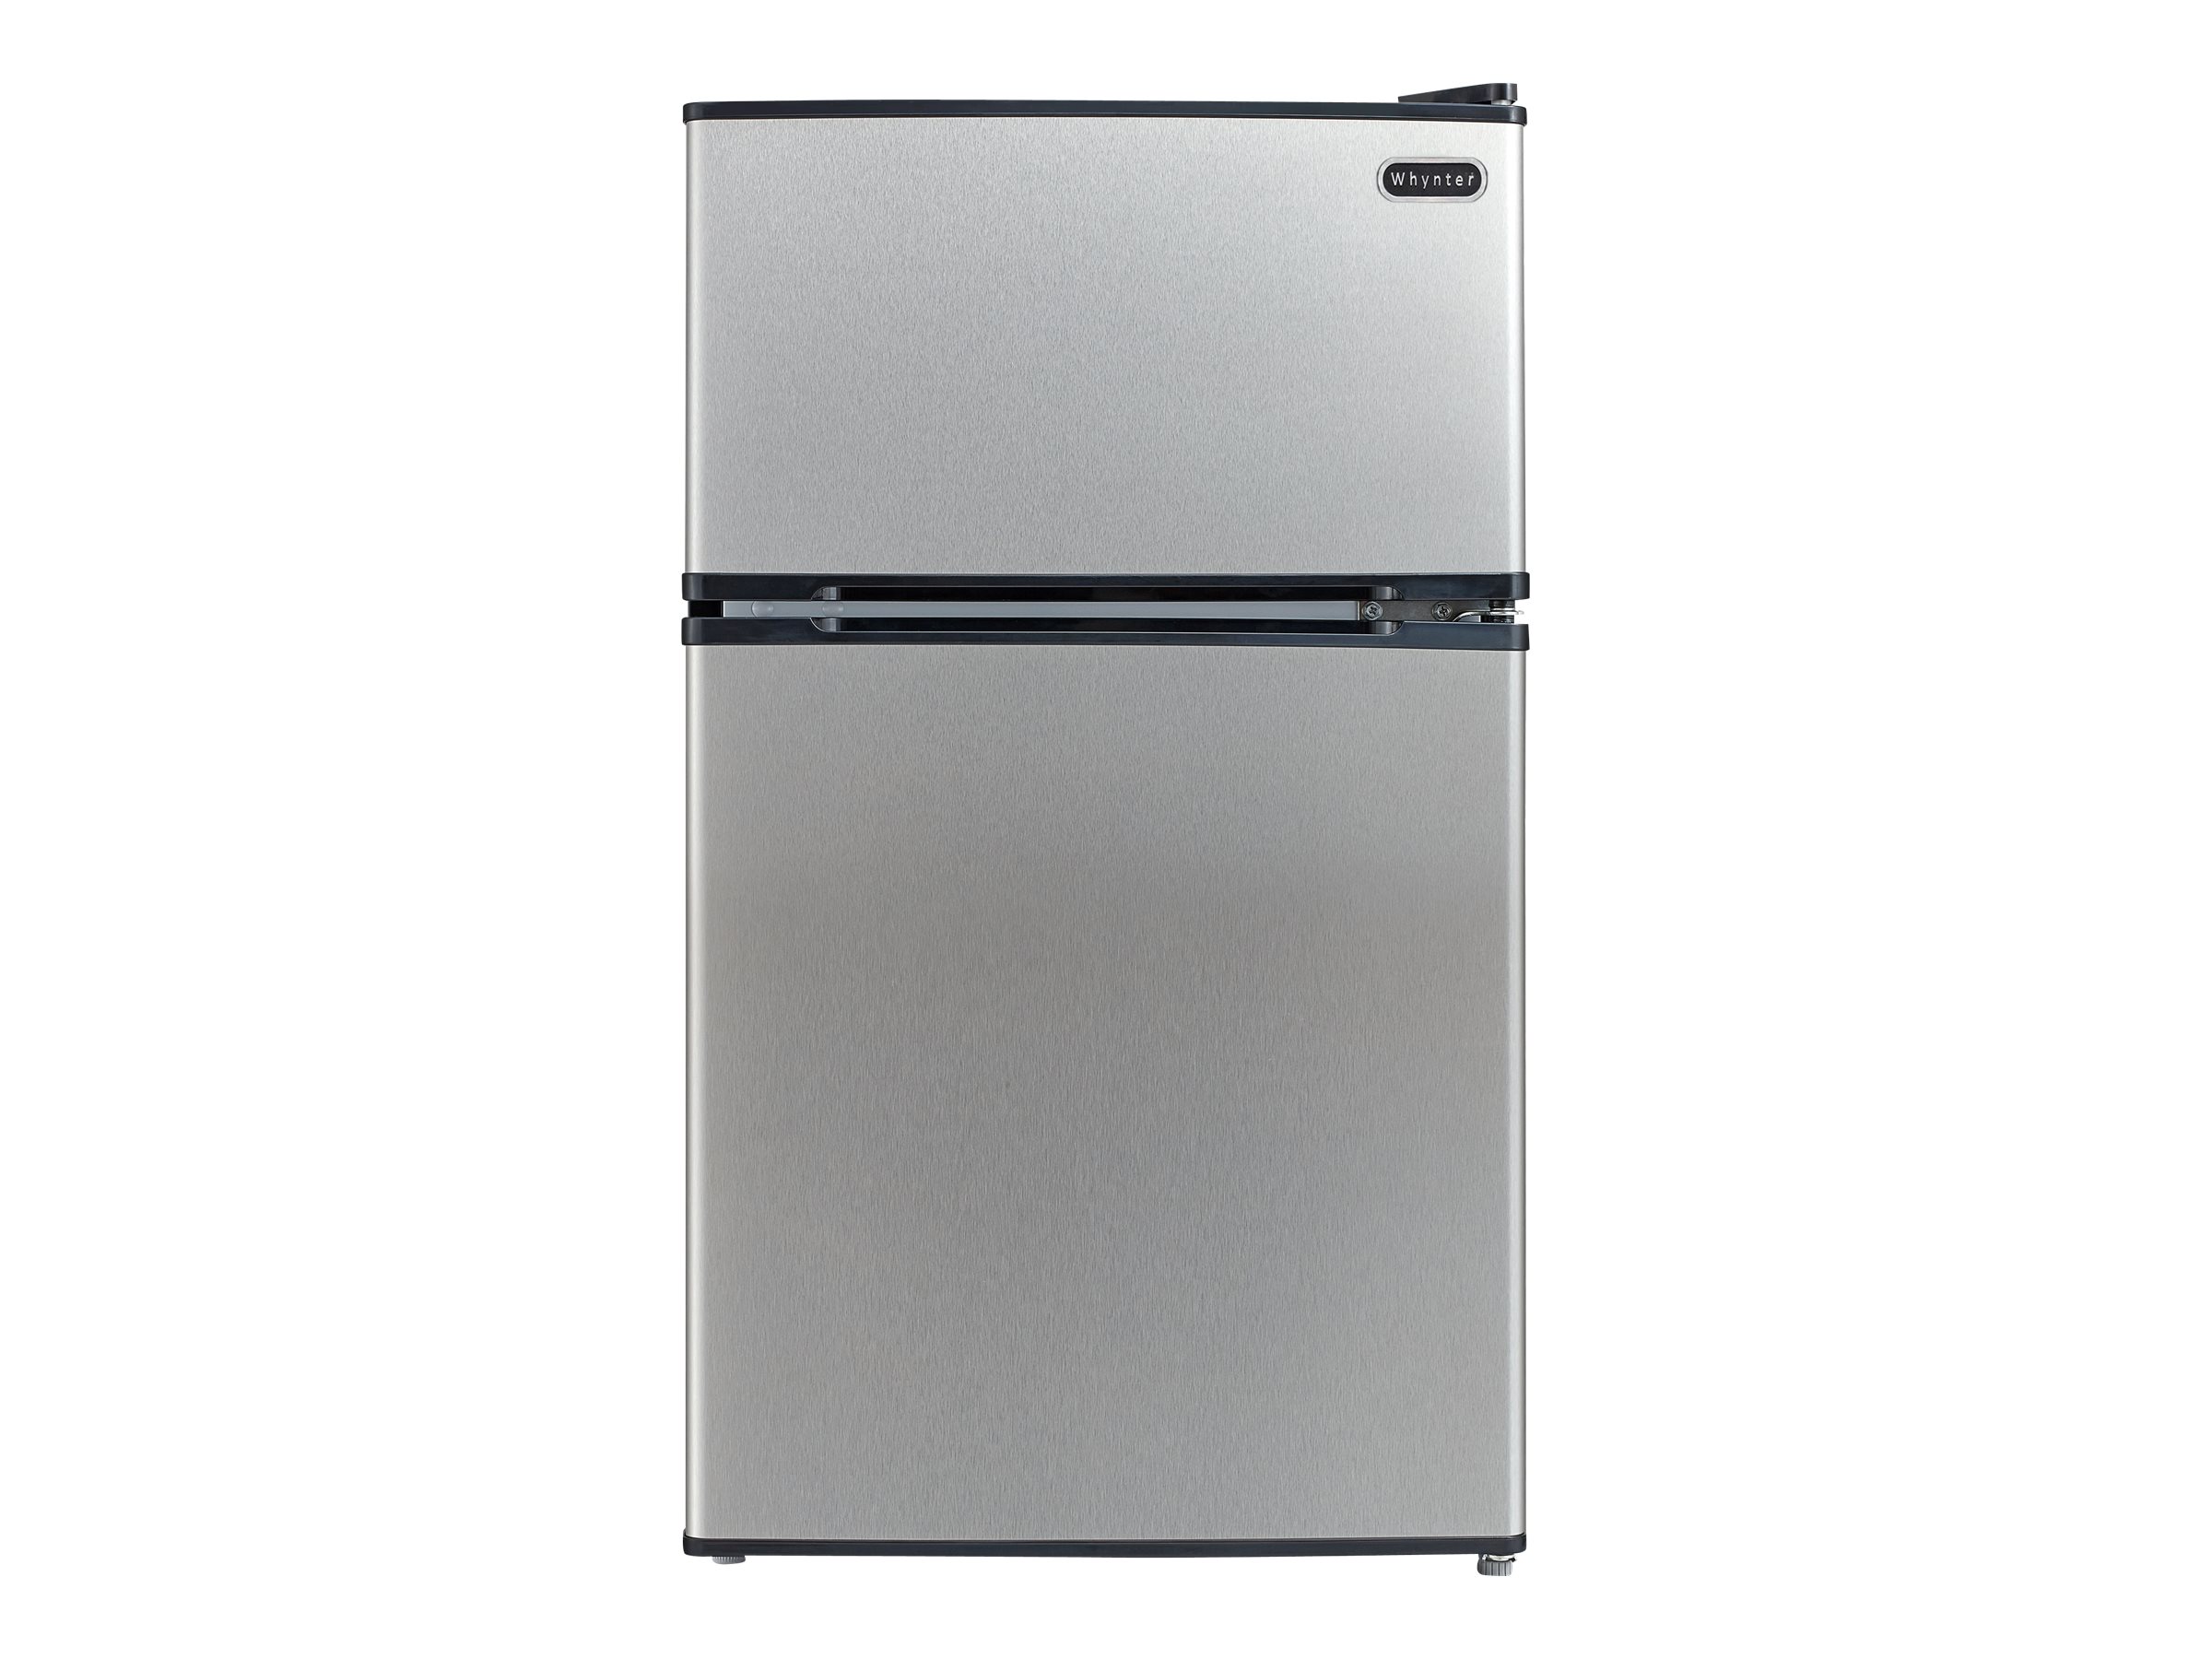 Whynter MRF-340DS Refrigerator Freezer Freestanding Width 19 in, Depth 23 in, Height 33 in Top-Freezer, Stainless Steel - image 2 of 6